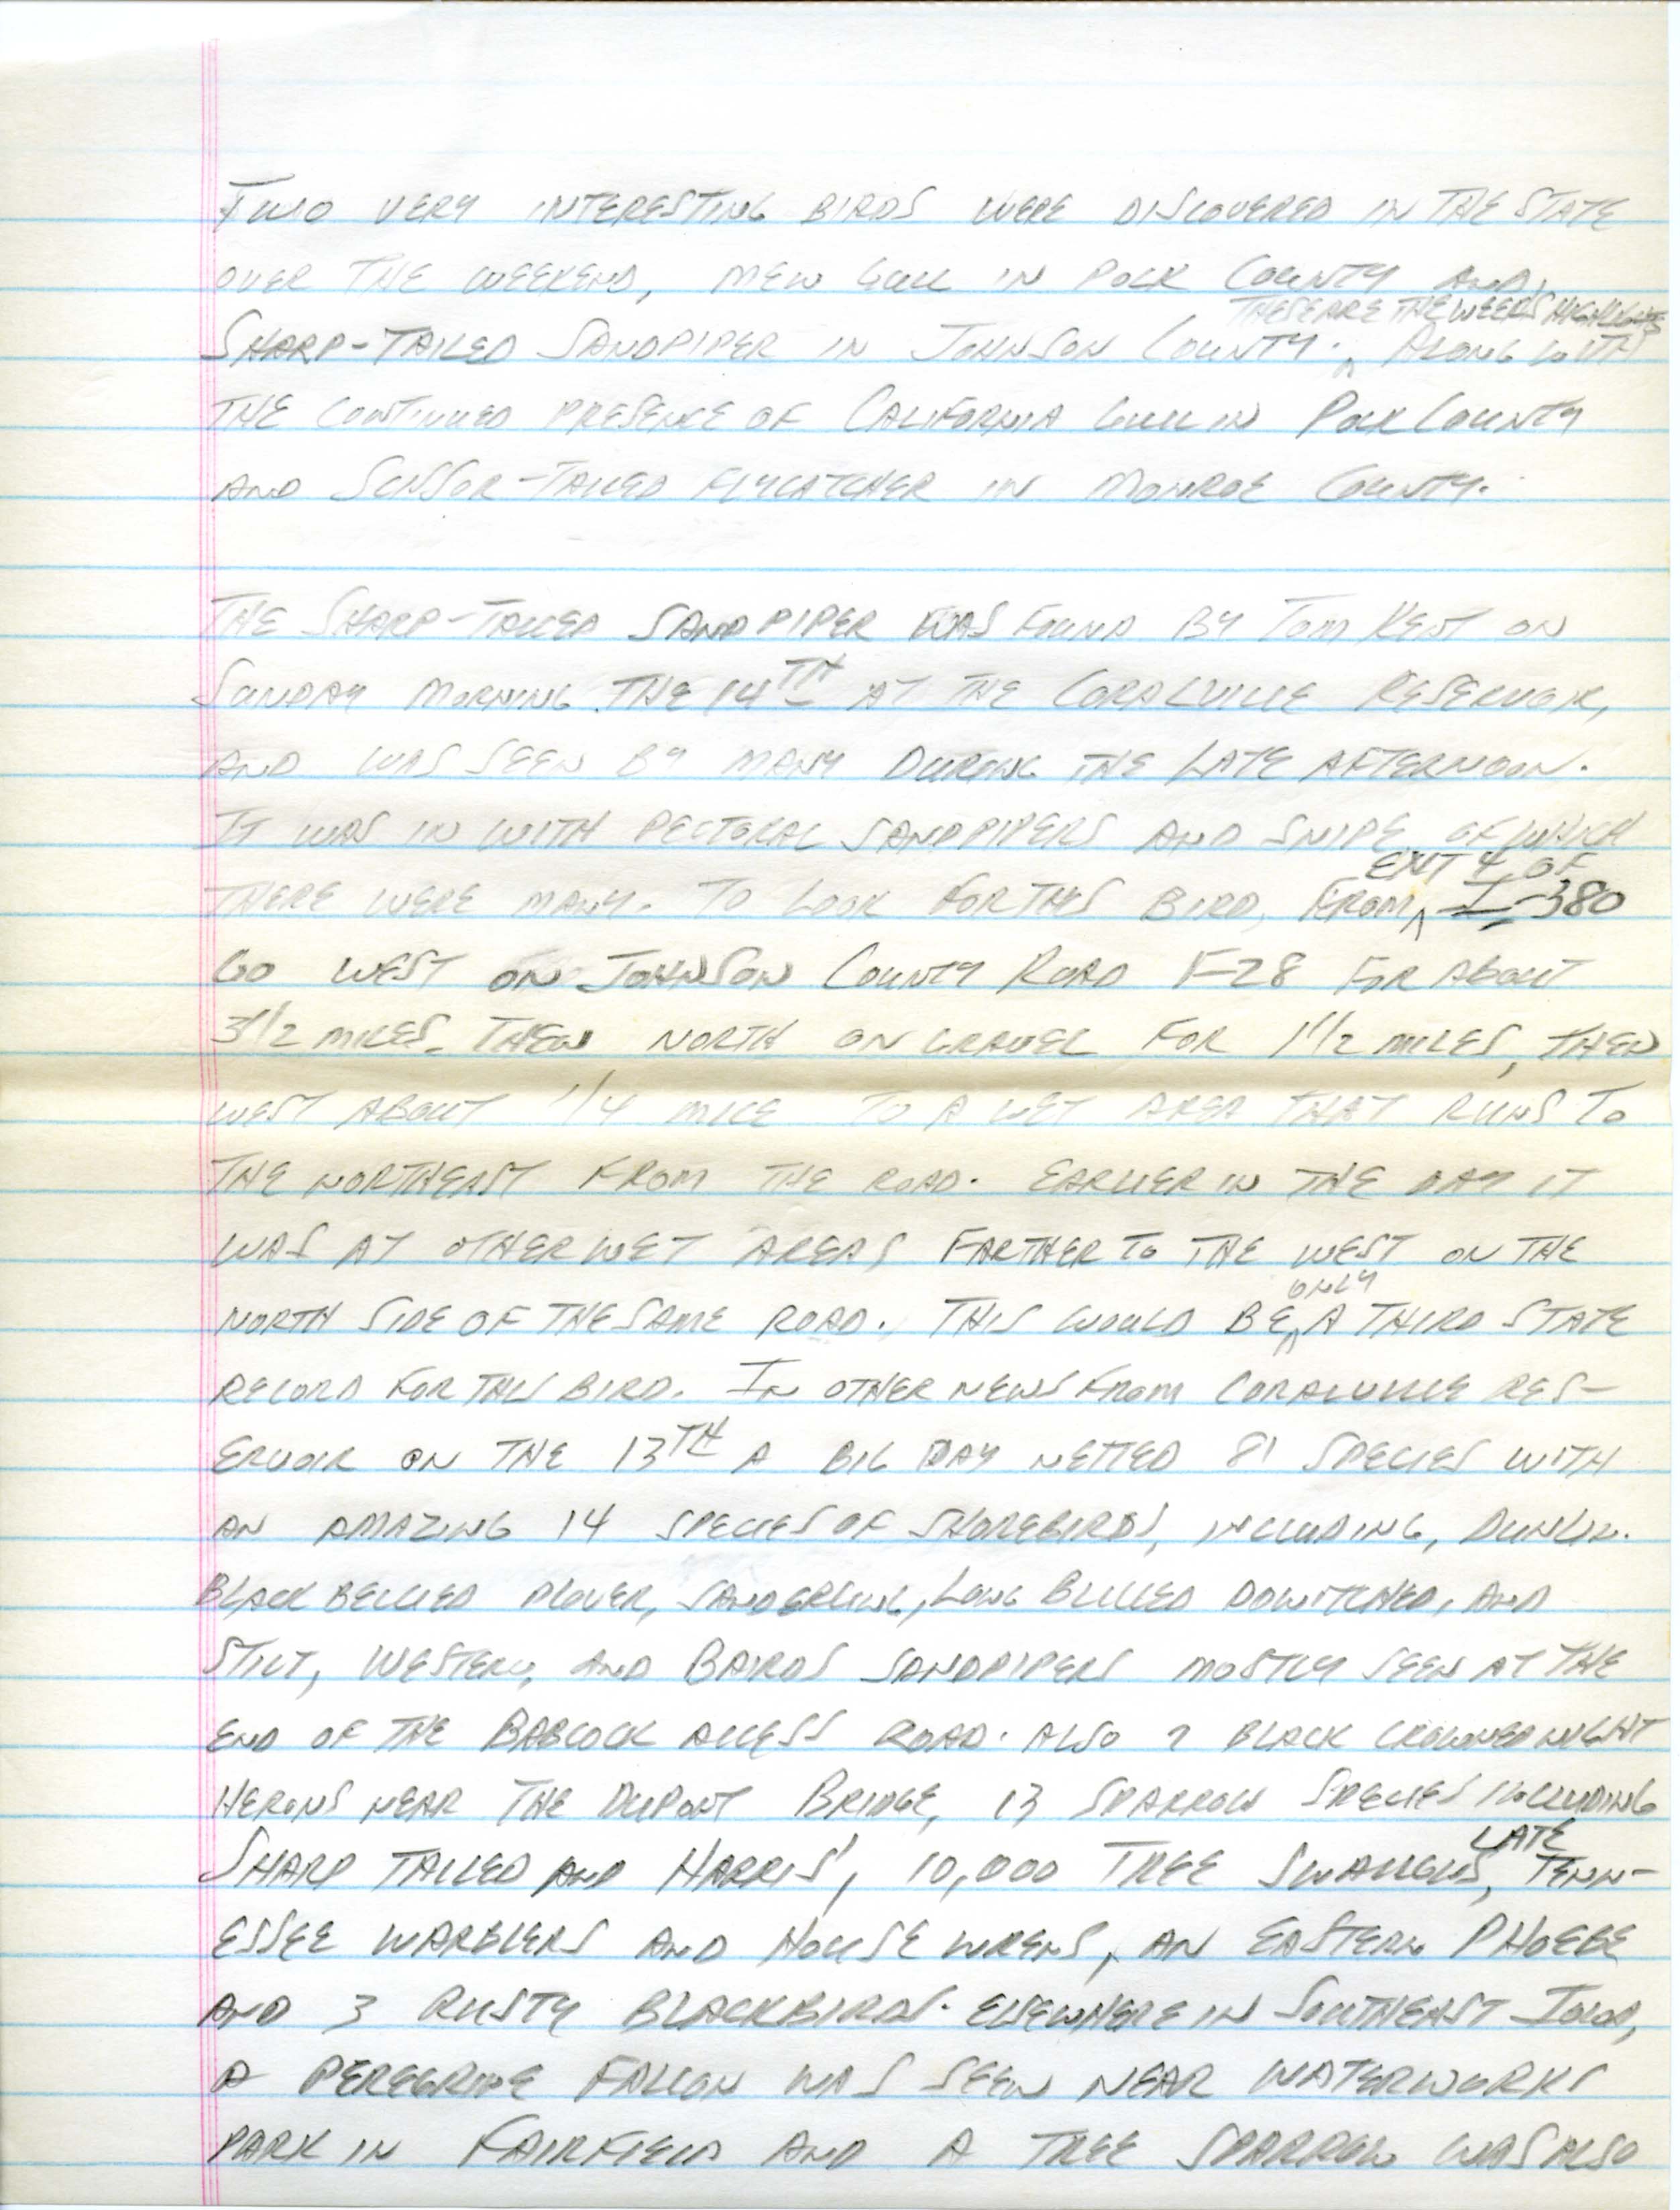 Iowa Birdline update, October 15, 1990, notes